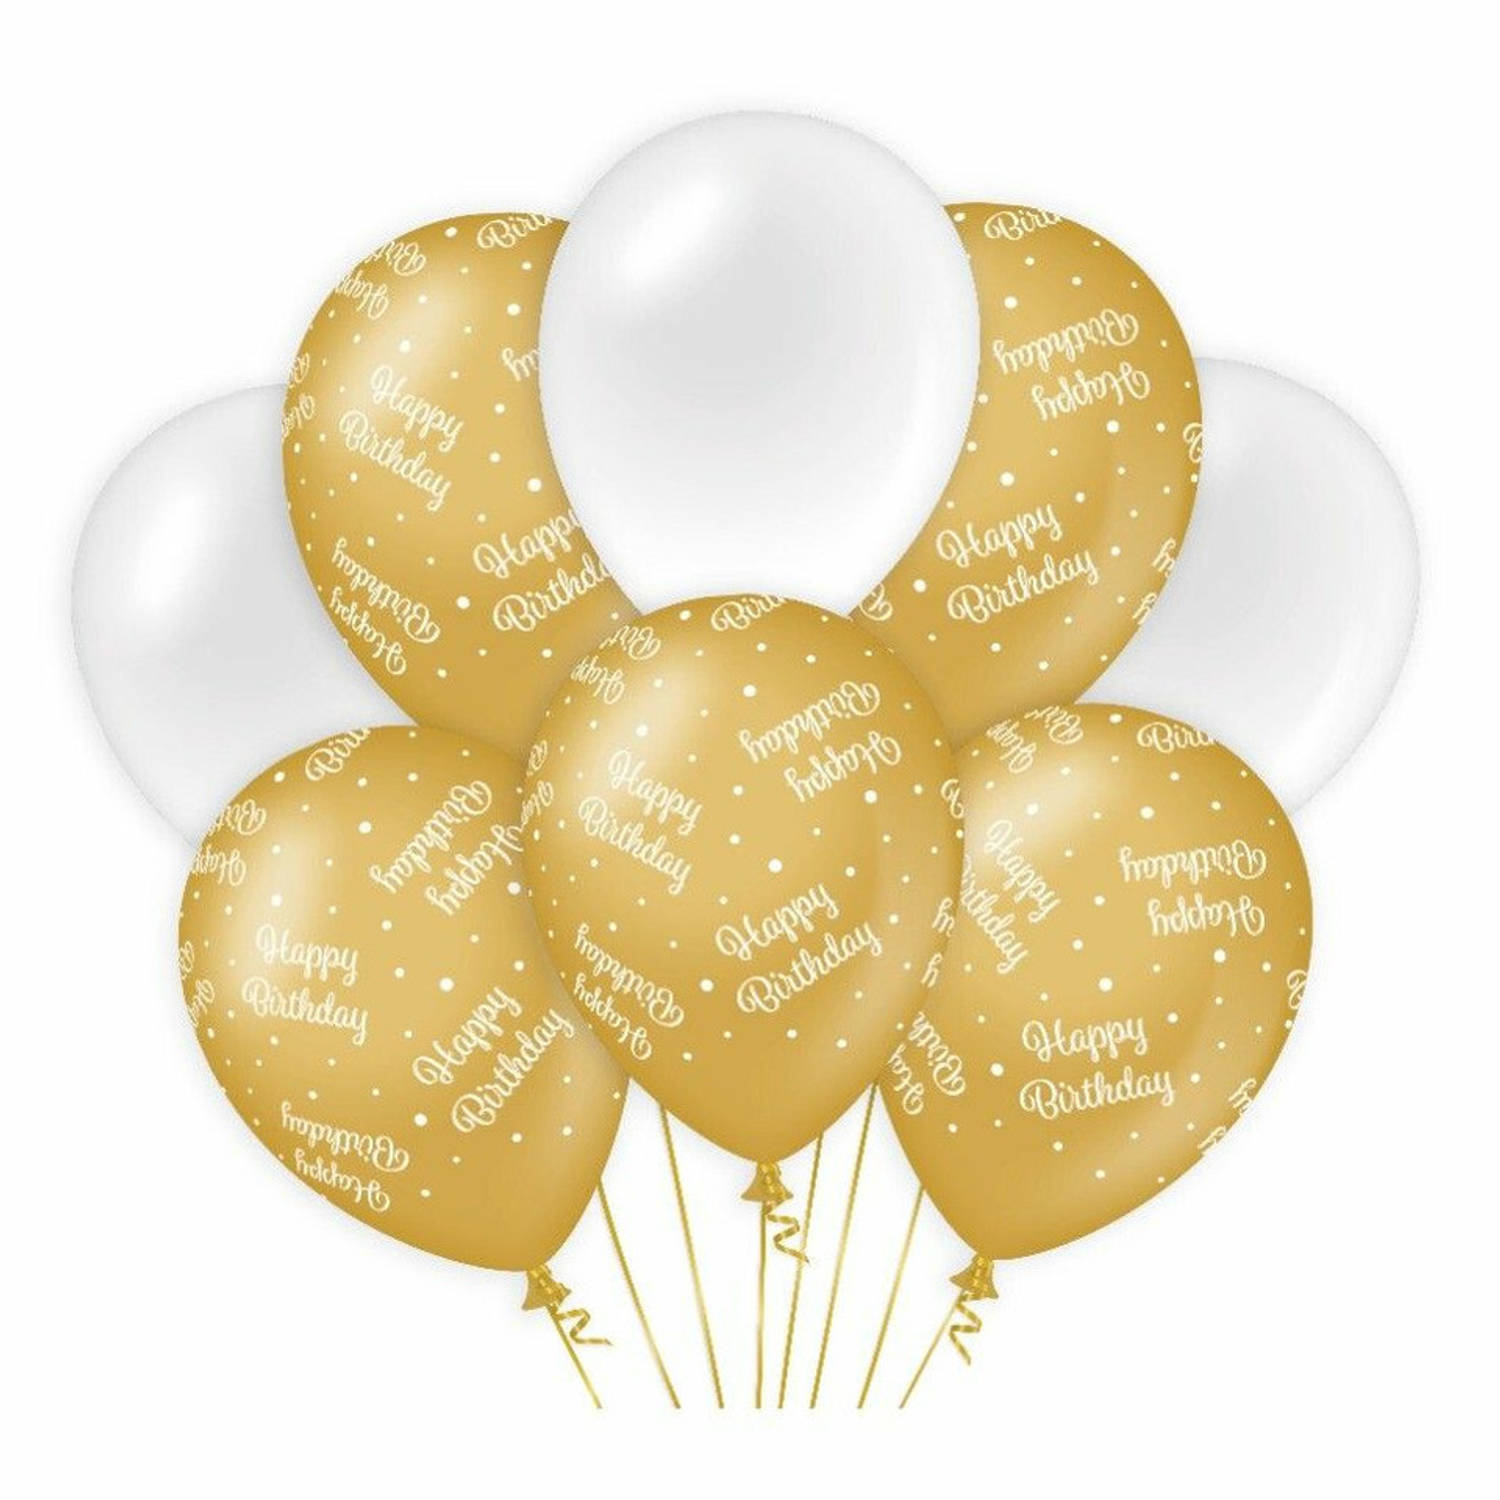 Paperdreams Happy Birthday thema Ballonnen - 24x - goud/wit - Verjaardag feestartikelen - Ballonnen